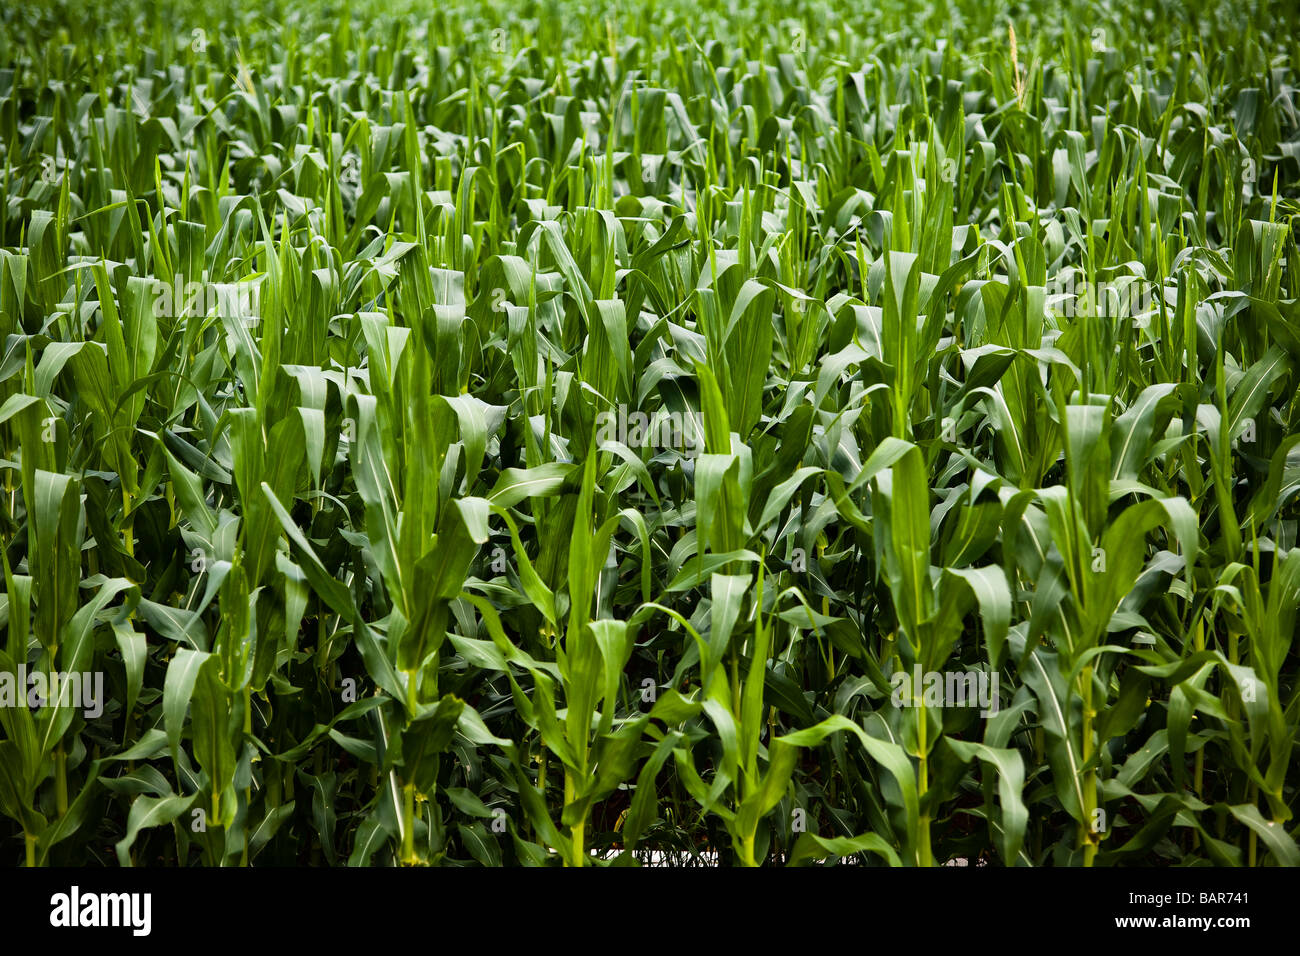 Agriculture corn plantation BR 163 road at Mato Grosso State Brazil Stock Photo